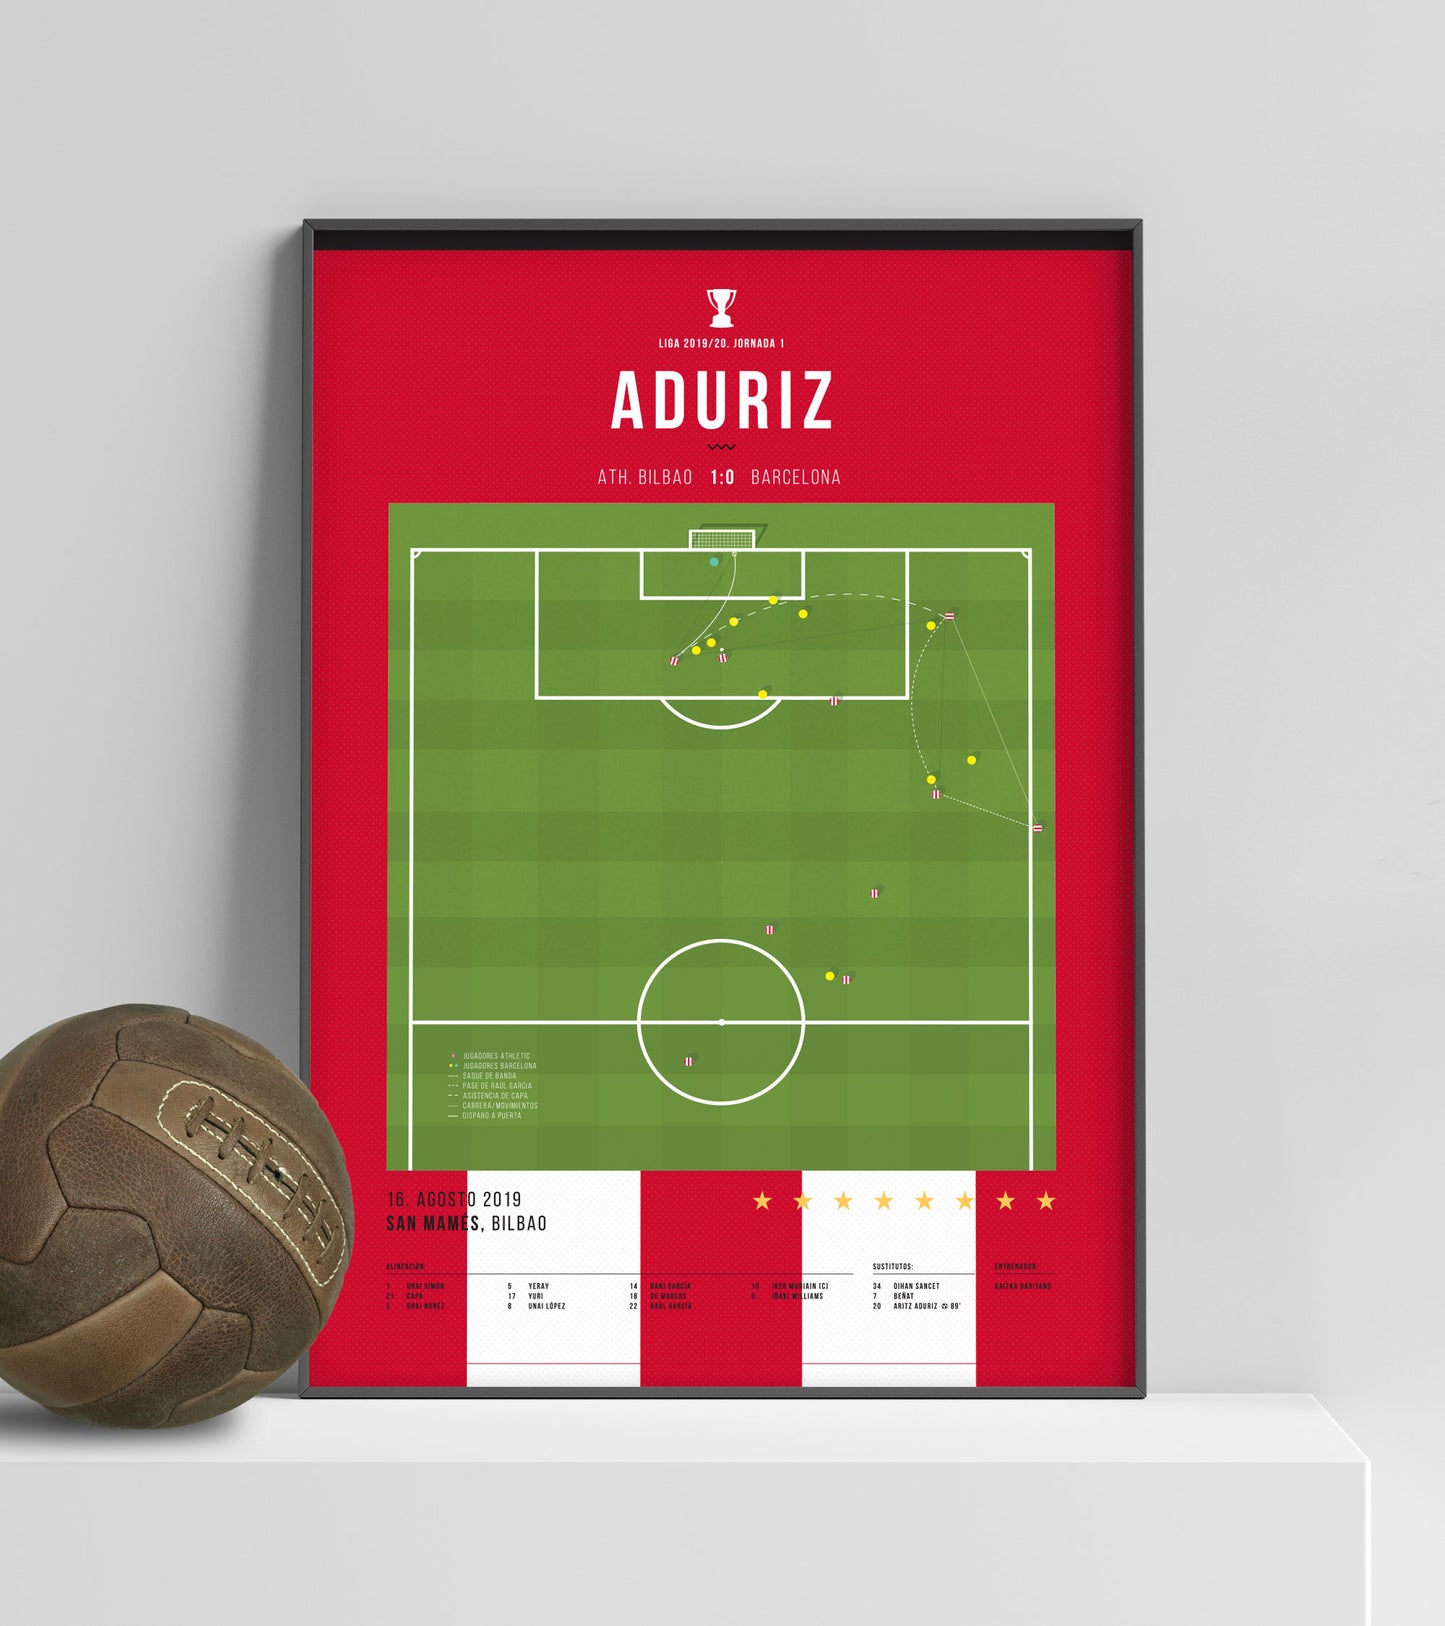 Aduriz's 'golazo' against Barcelona